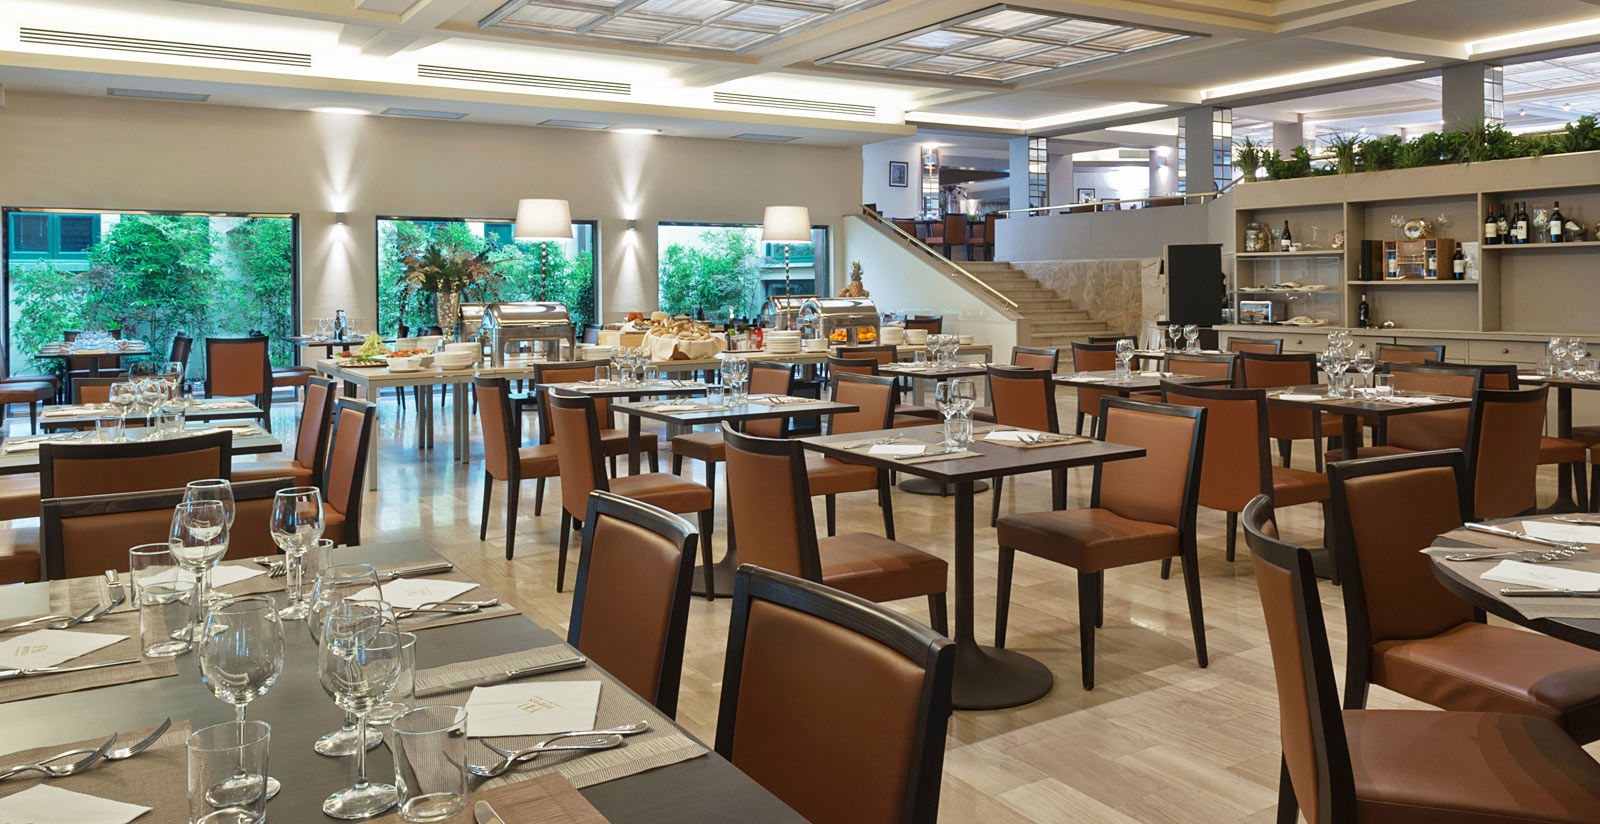 Grand Hotel Mediterraneo - Restaurant and Bar 5